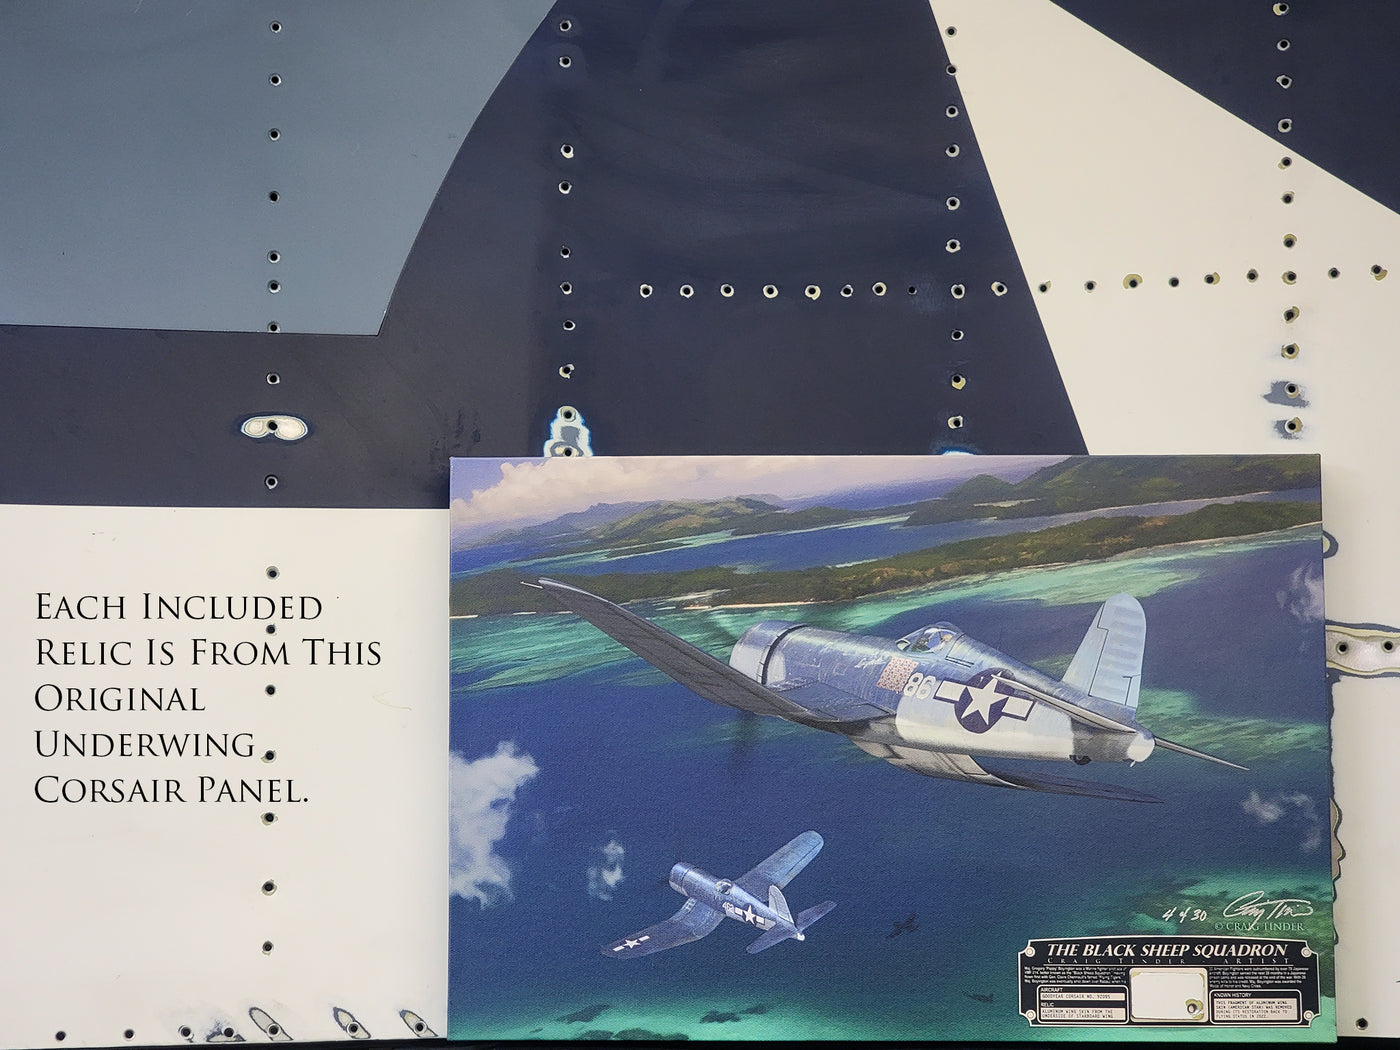 Black Sheep Squadron - F4U Corsair Aviation Art-Art Print-Aces In Action: The Workshop of Artist Craig Tinder